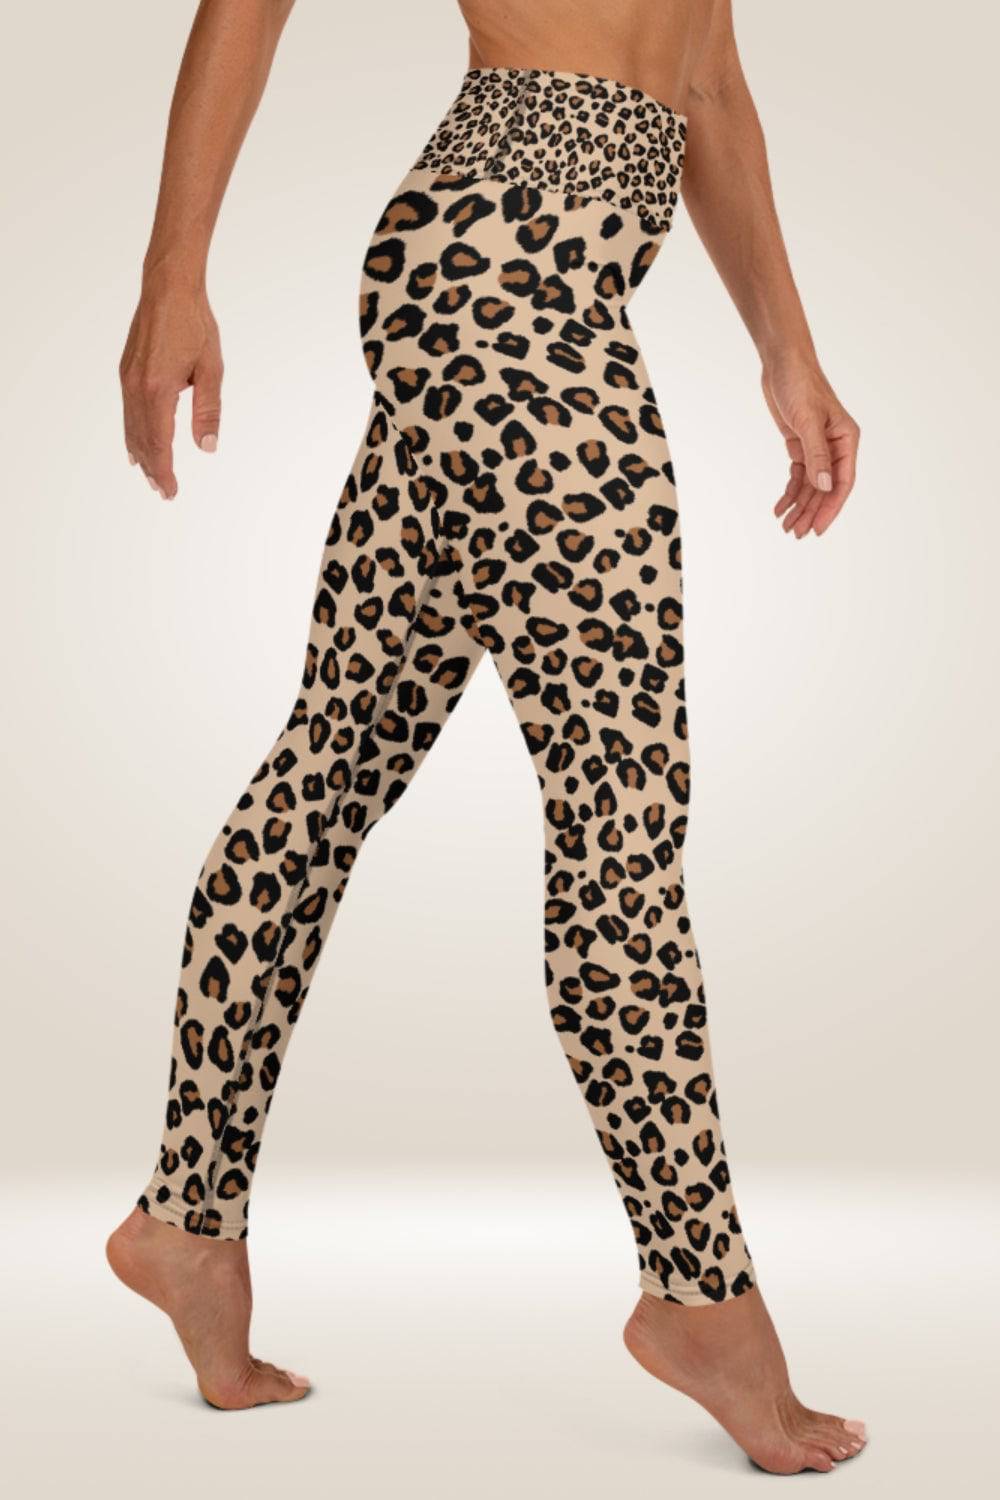 Leopard Print Yoga Leggings - TGC Boutique - Leggings